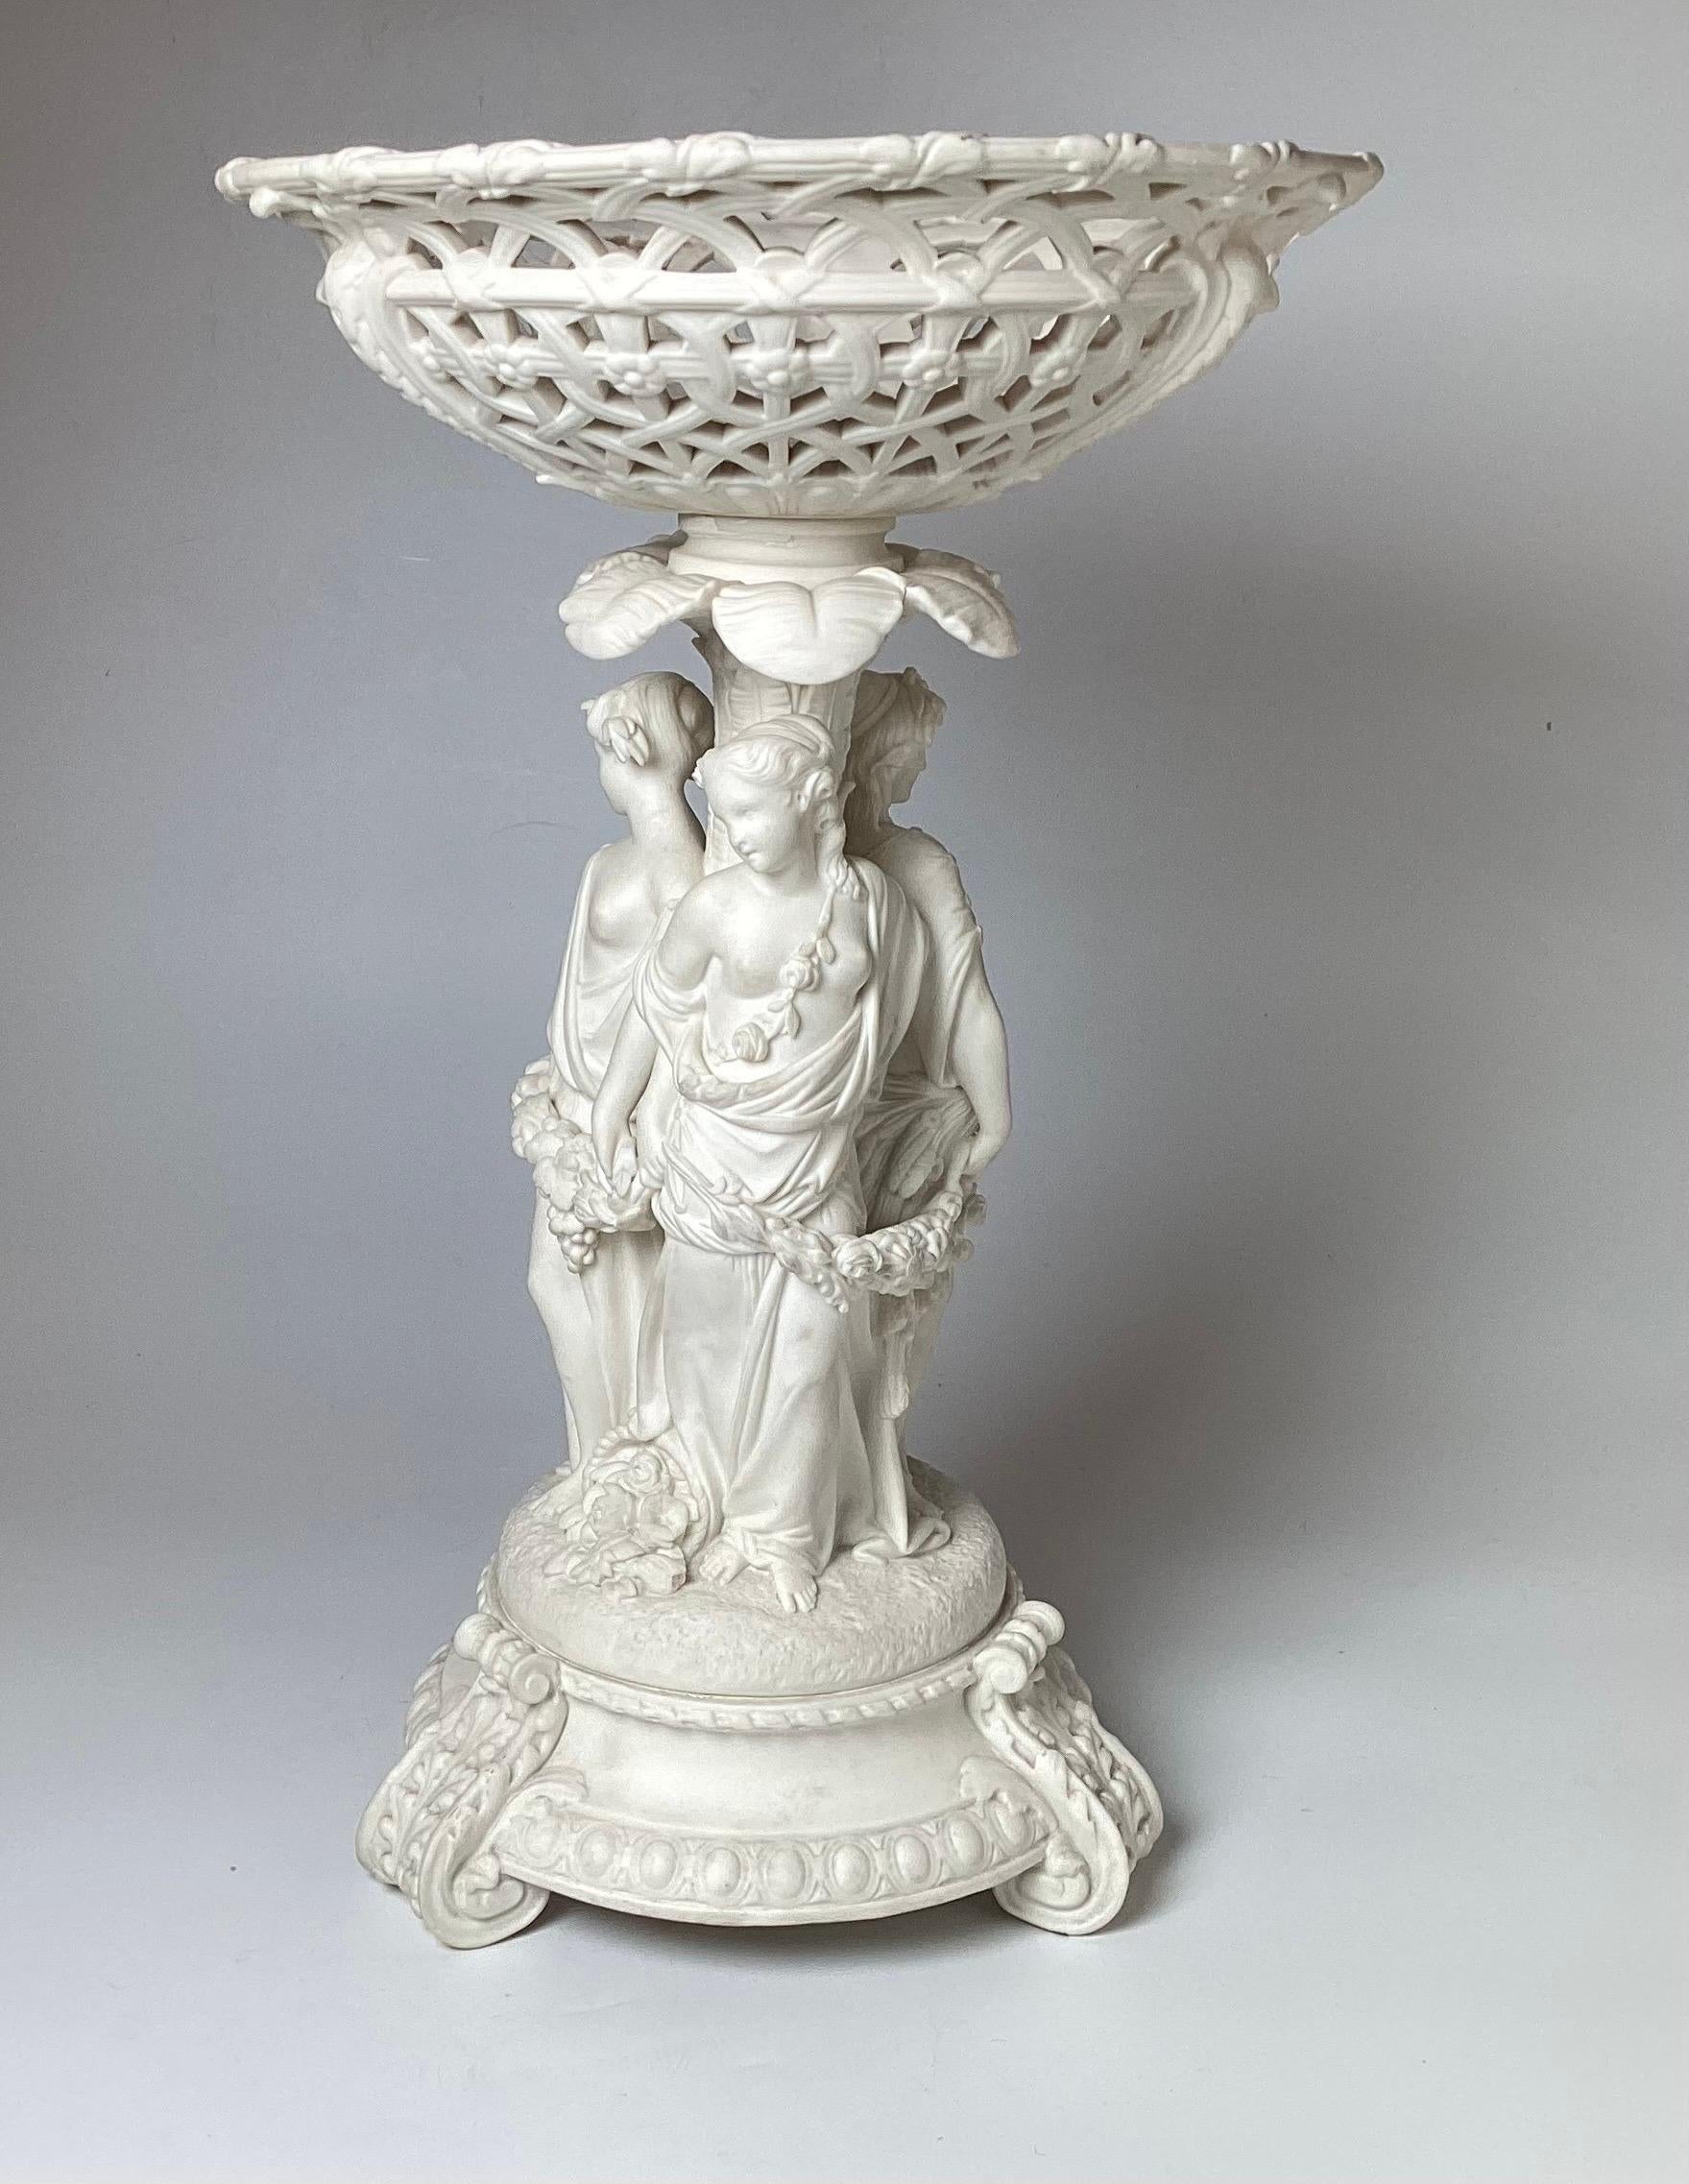 Neoclassical Revival A Large English Parian Porcelain Figural Centerpiece Bowl For Sale